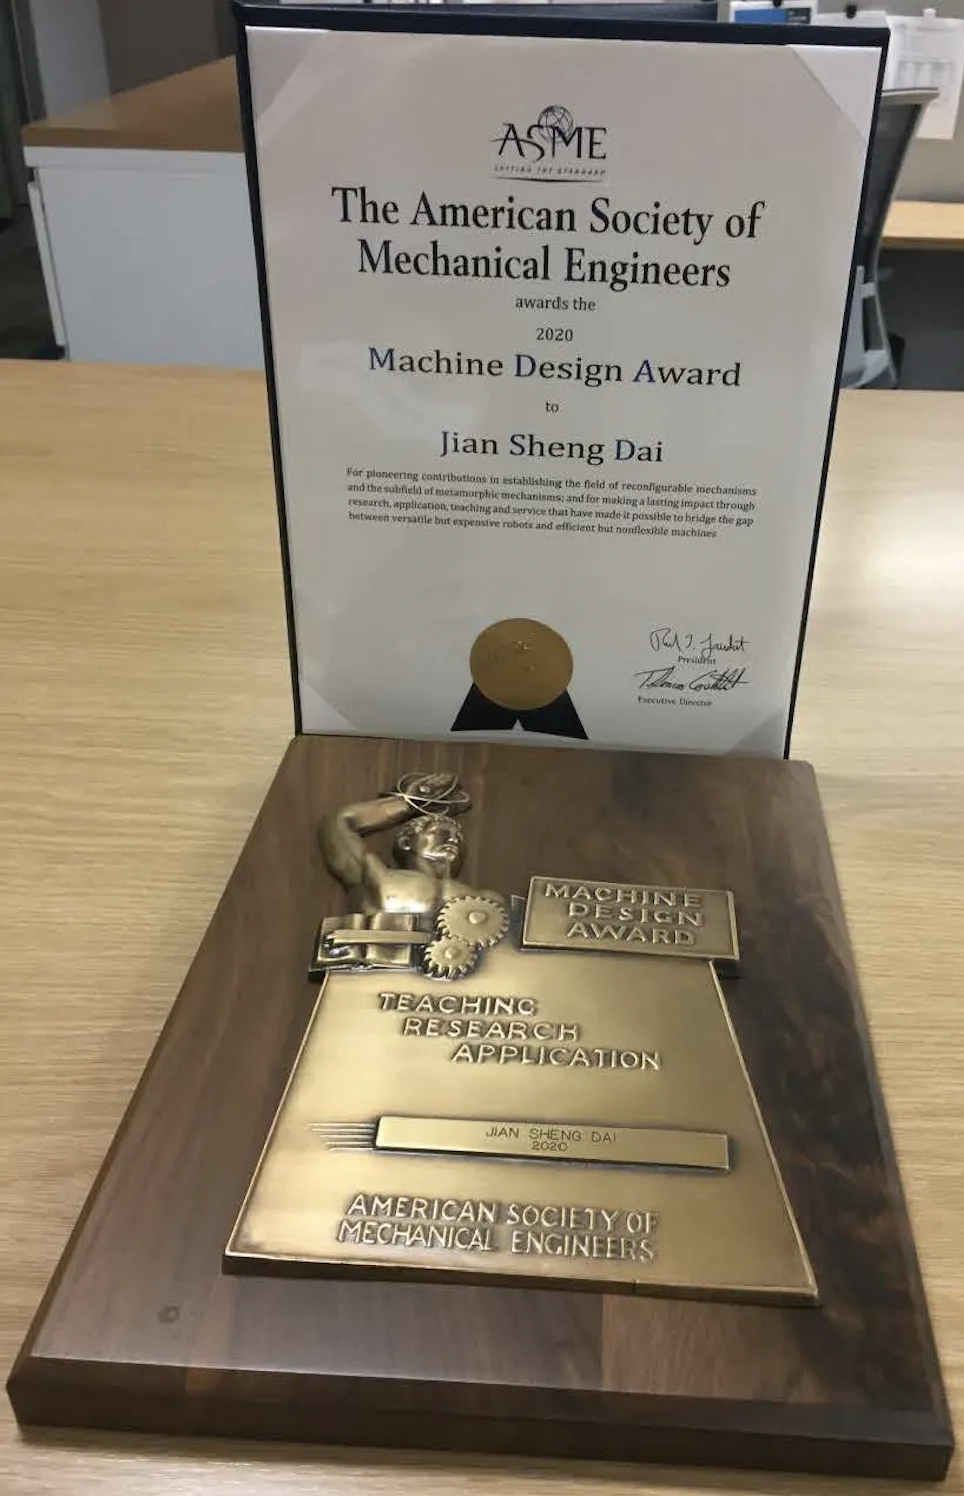 The ASME Machine Design Award